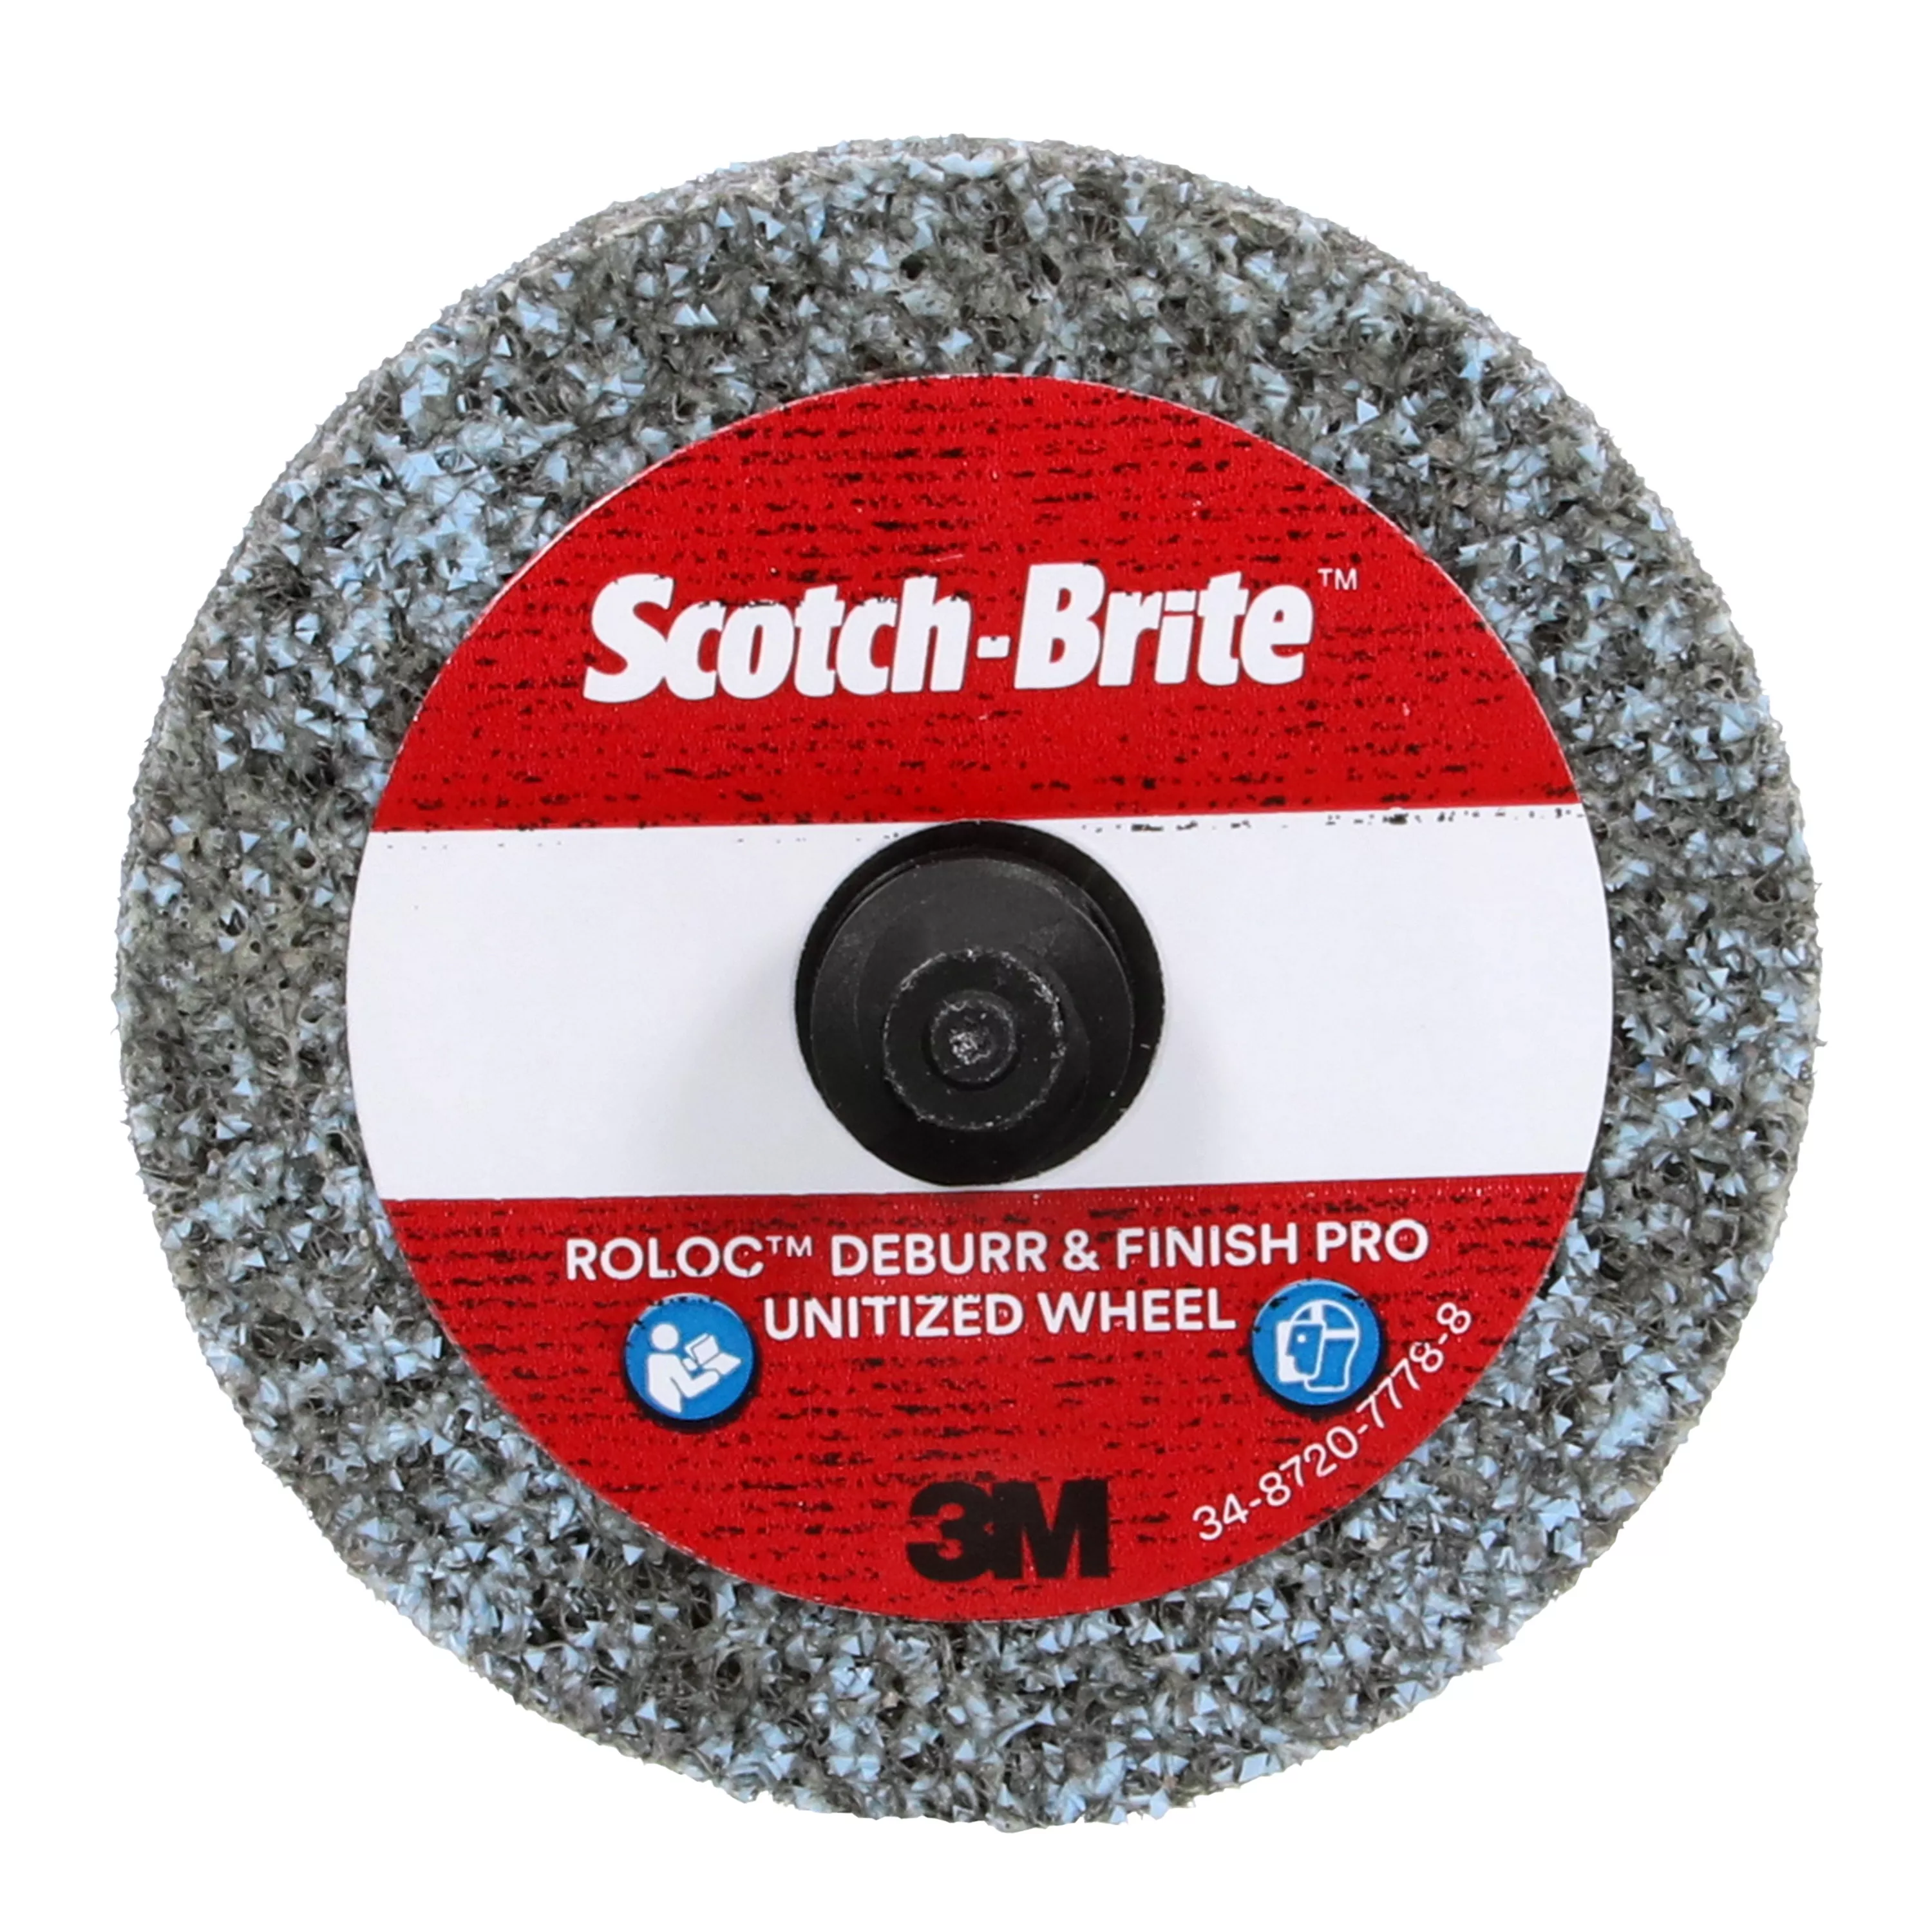 SKU 7100290649 | Scotch-Brite™ Roloc™ Deburr & Finish PRO Unitized Wheel